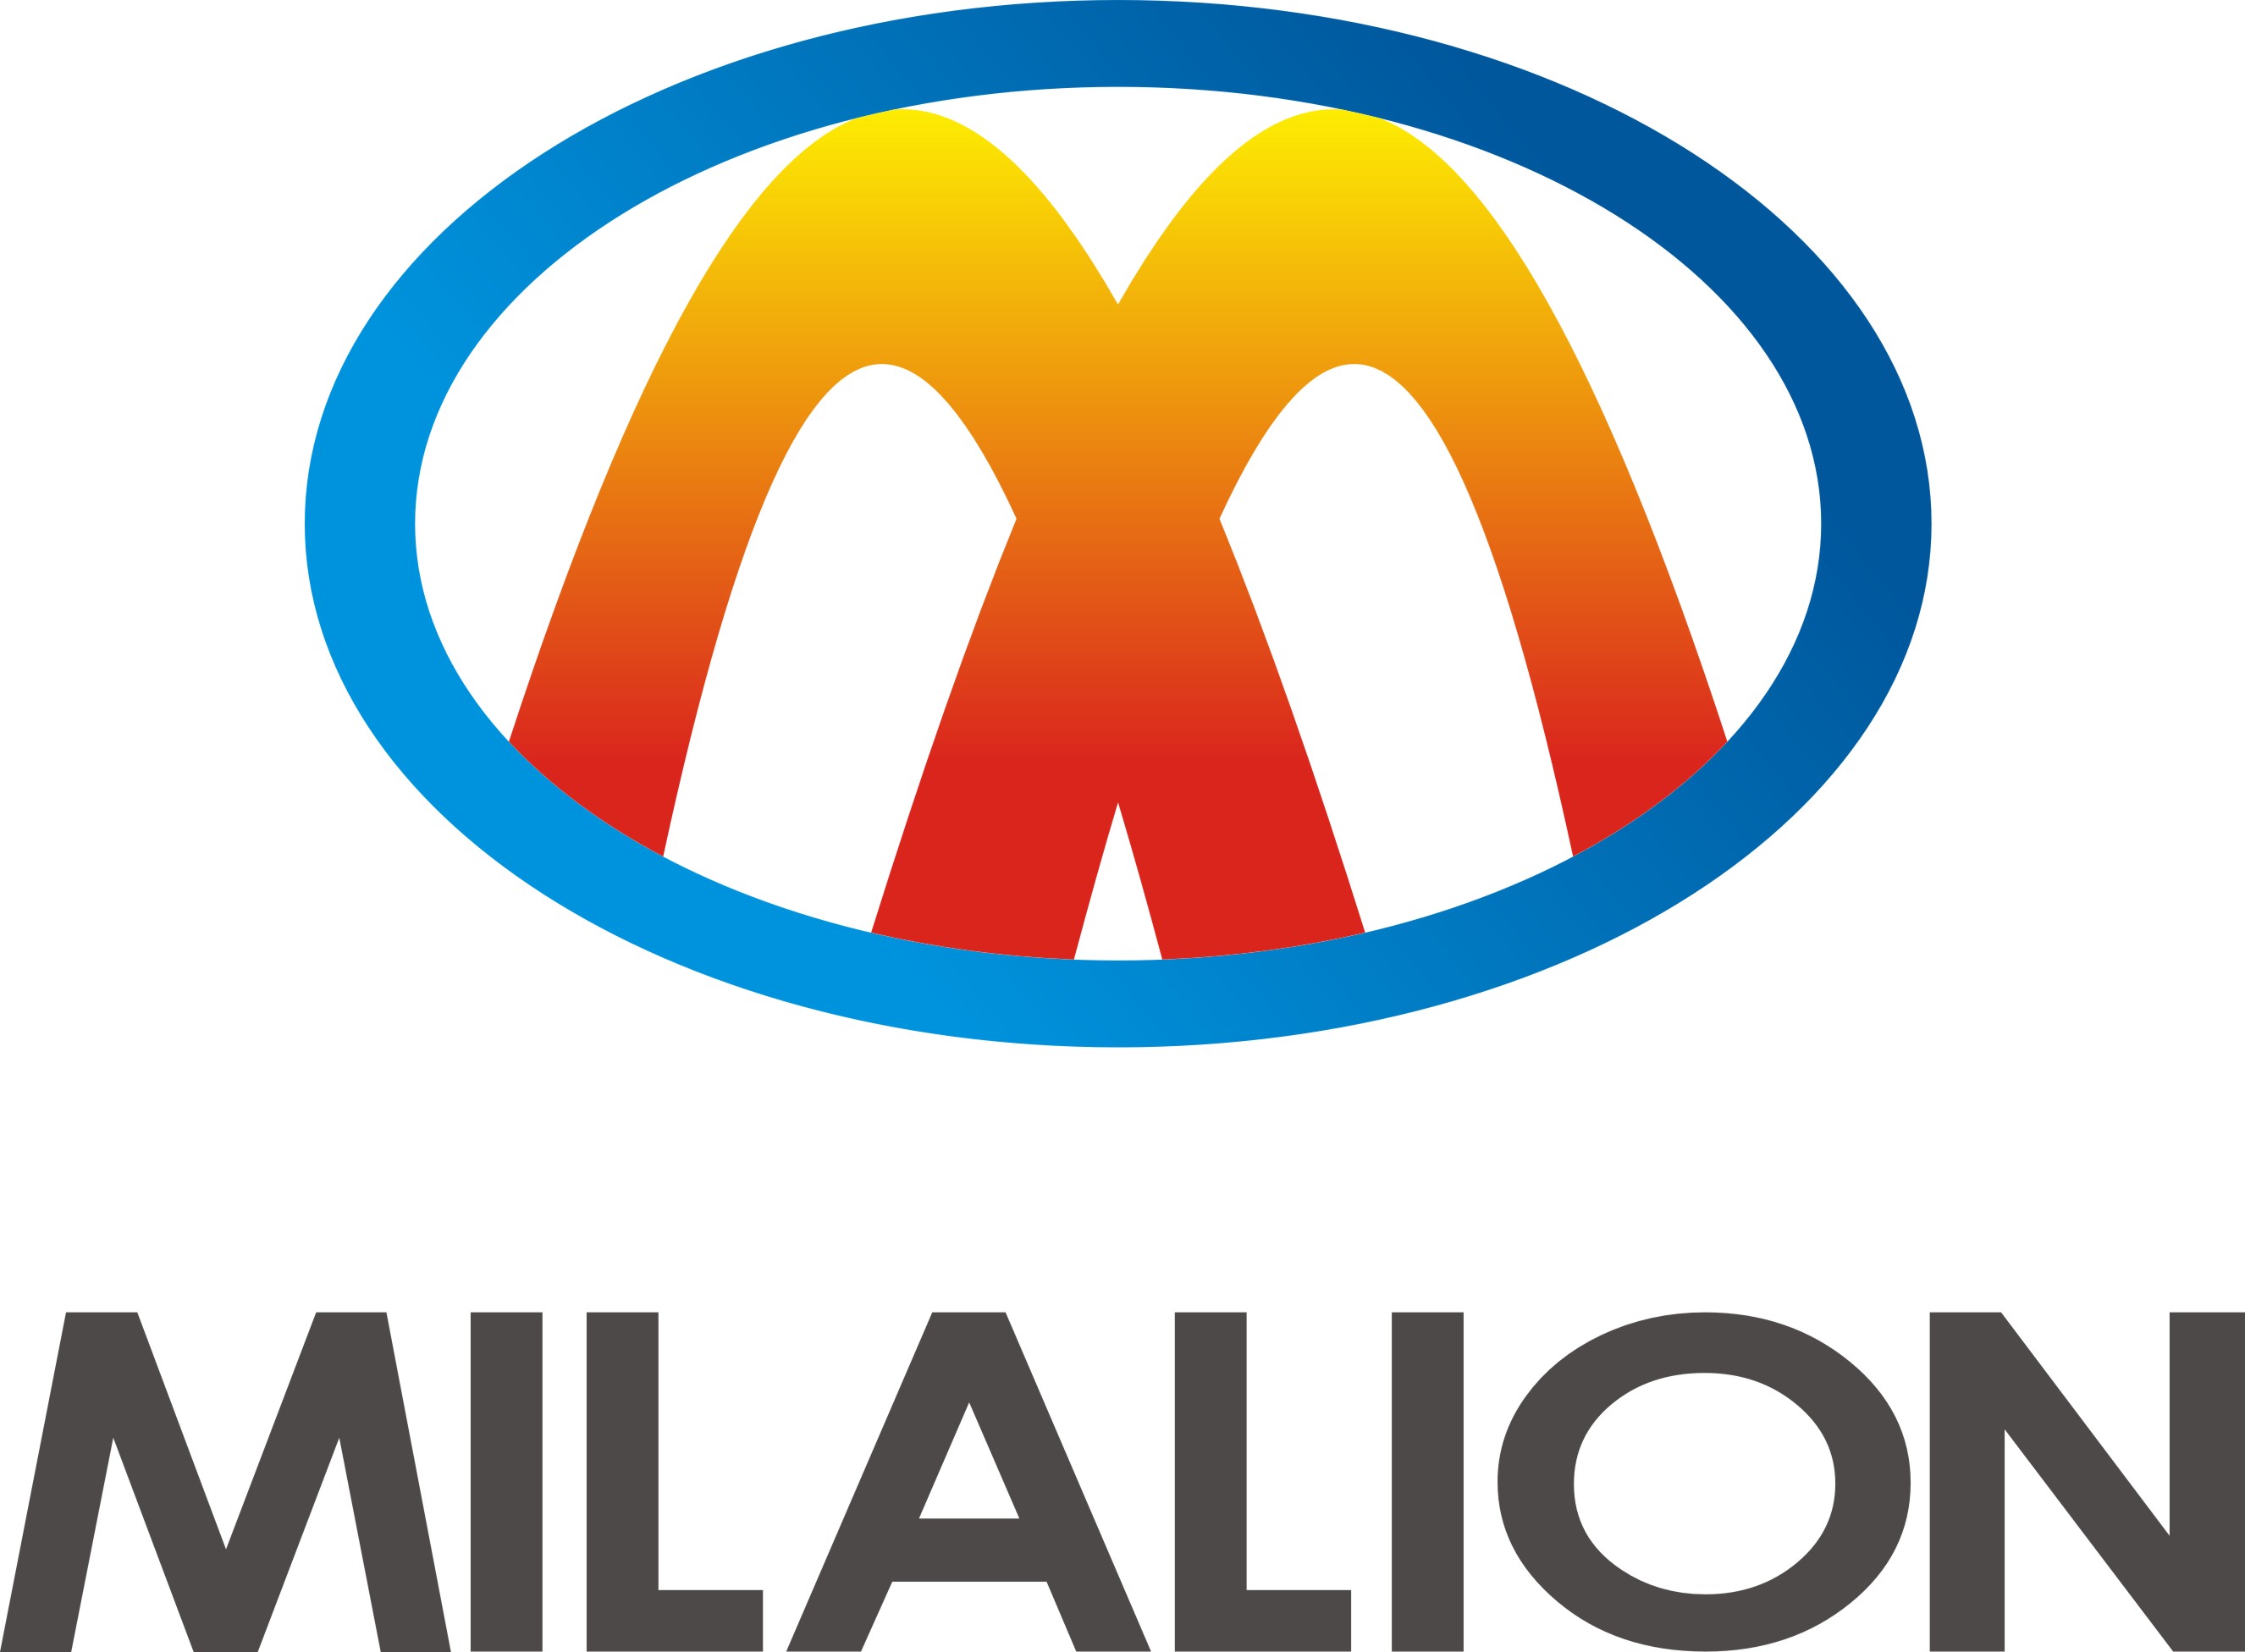 Ilalion Tools Co.,Ltd